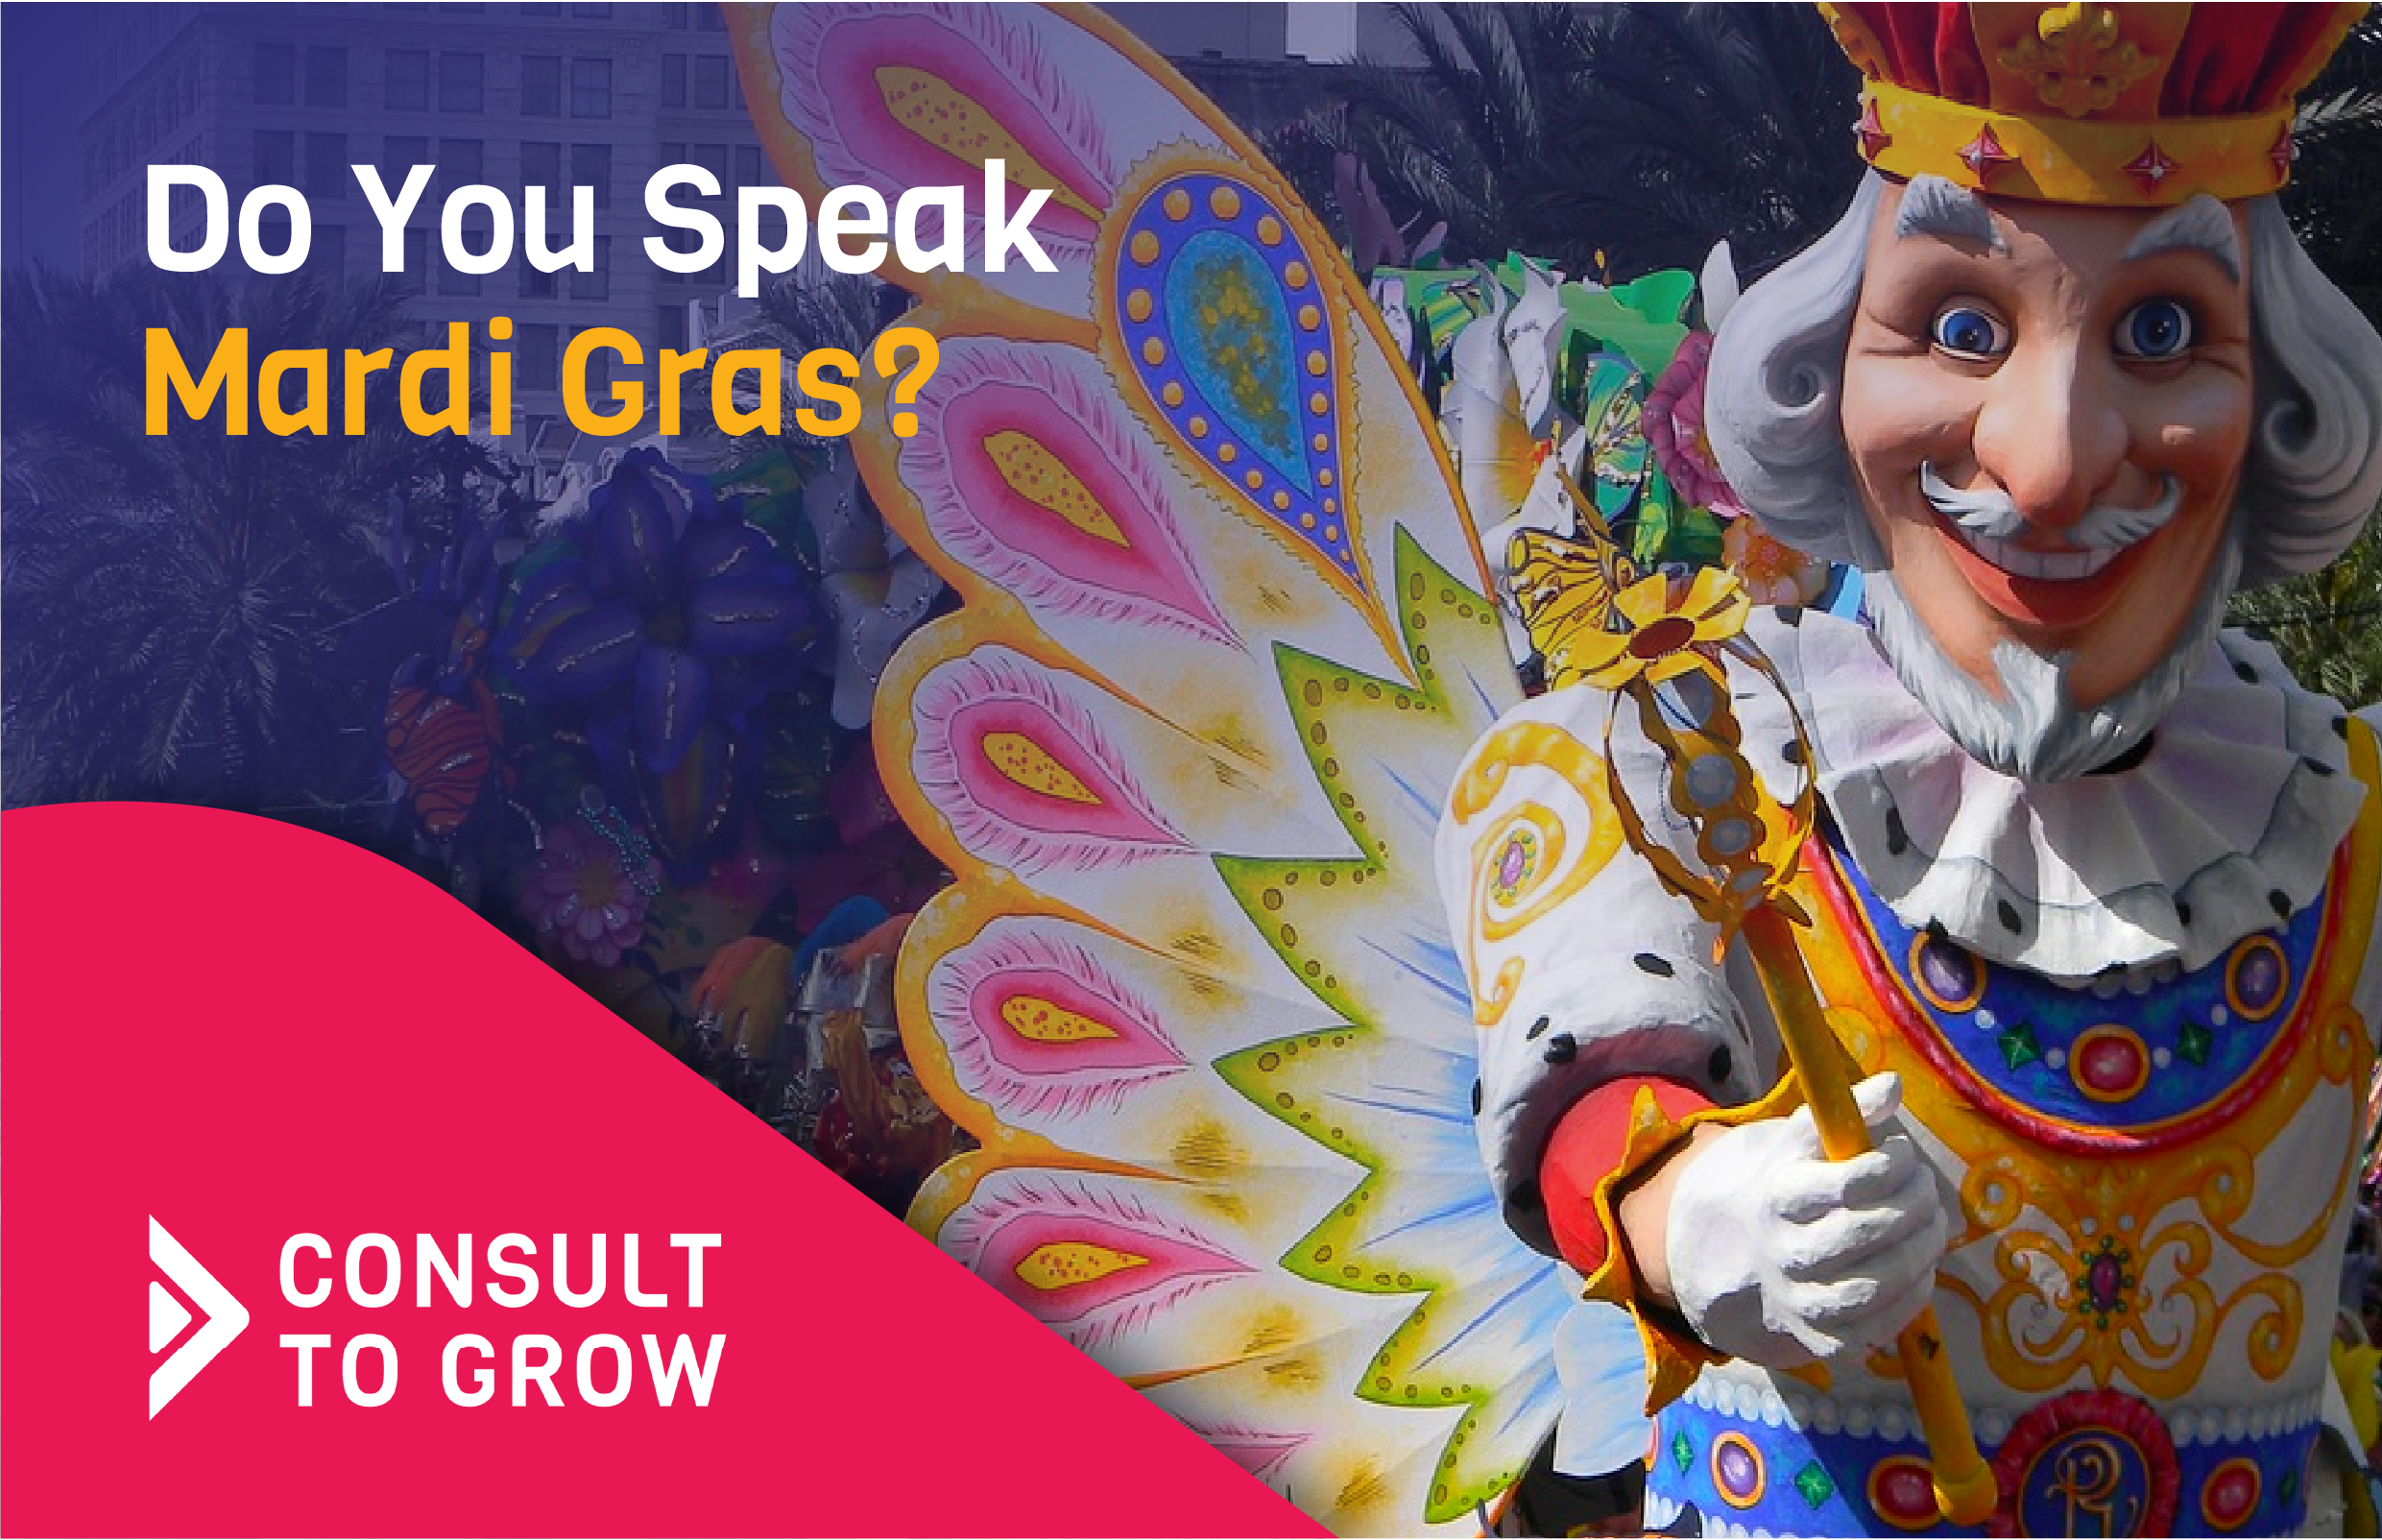 Do You Speak Mardi Gras?